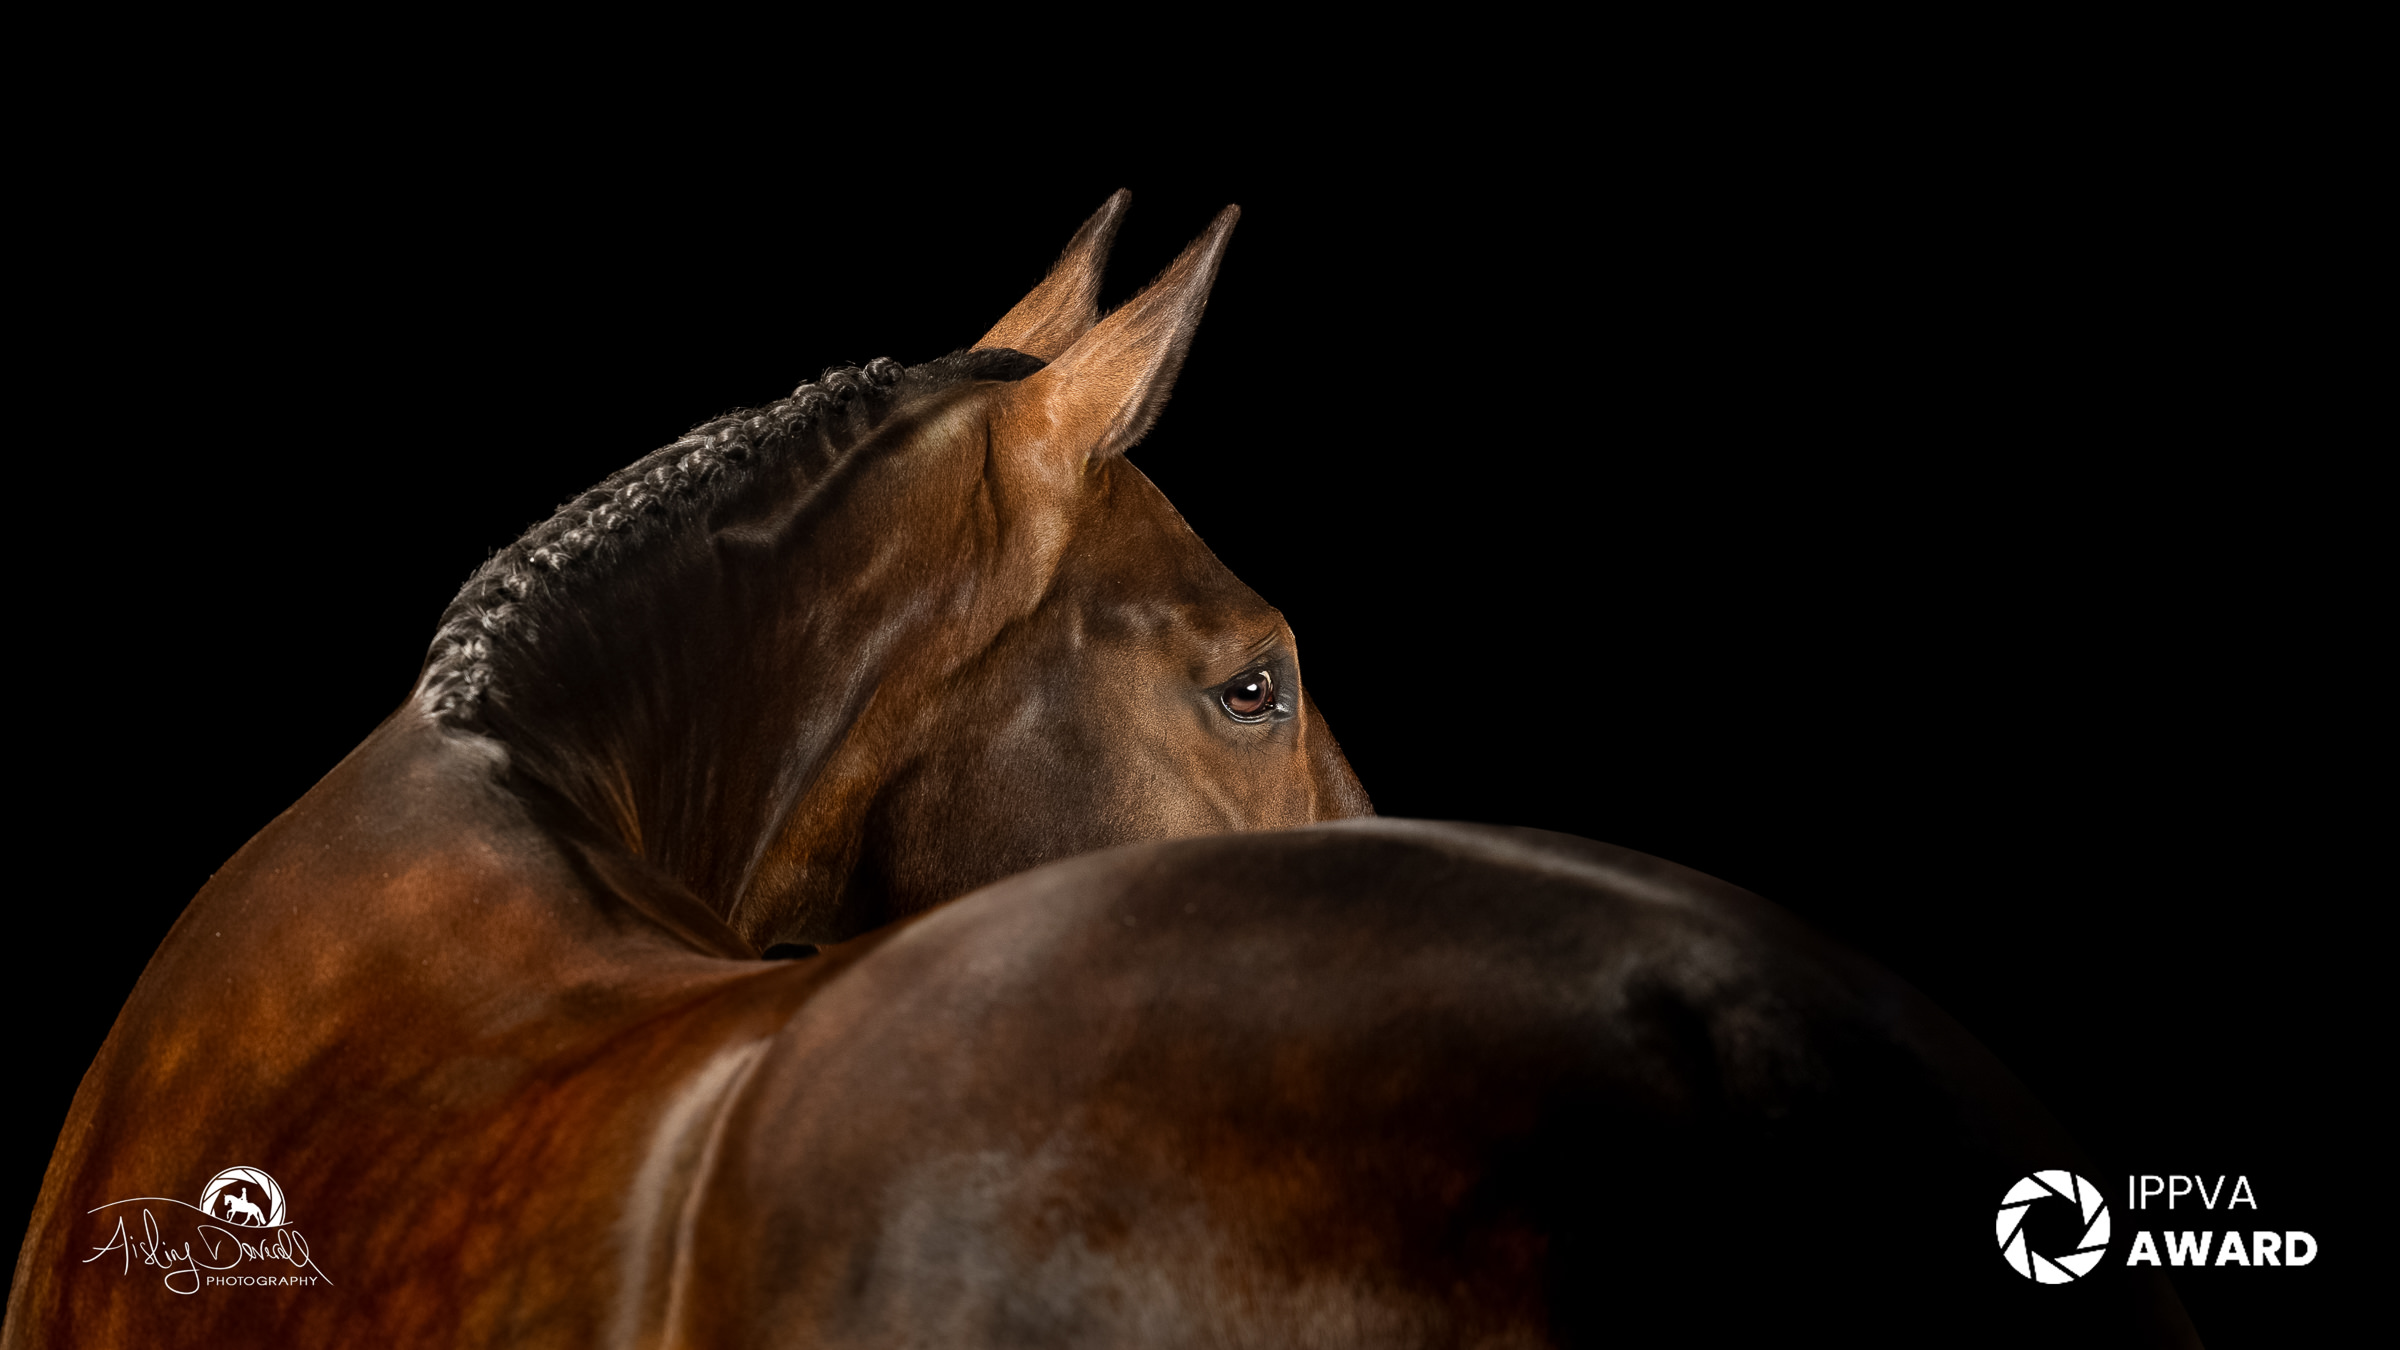 IPPVA award winning studio portrait of a bay horse with plaited mane